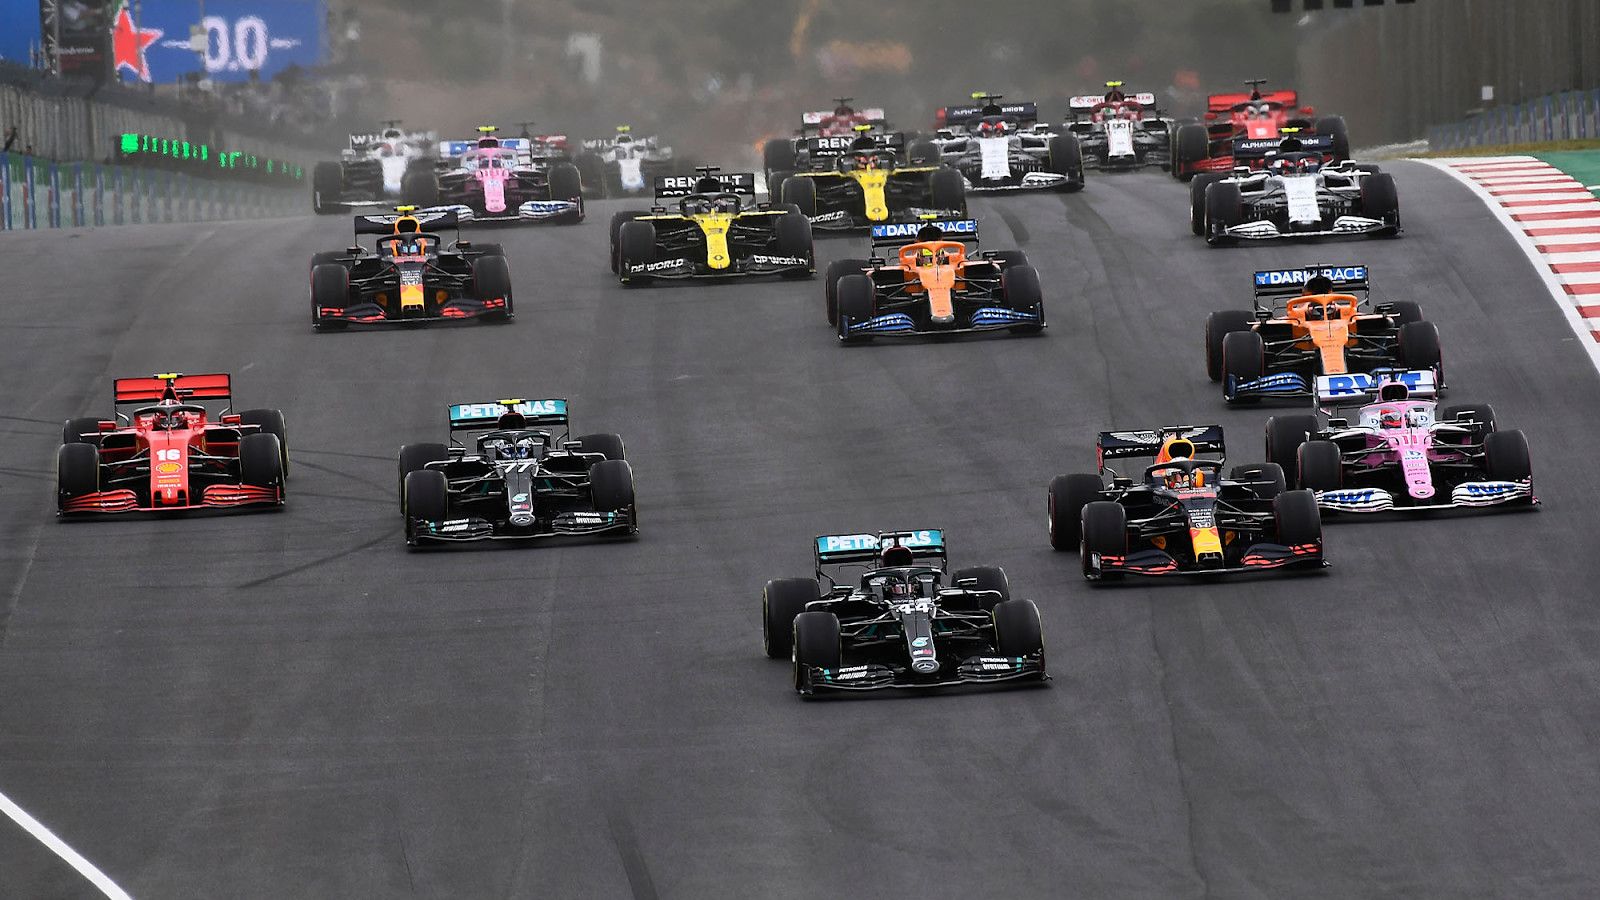 F1! Portuguese Grand Prix 2021: Live Free Stream, Watch on Reddit?